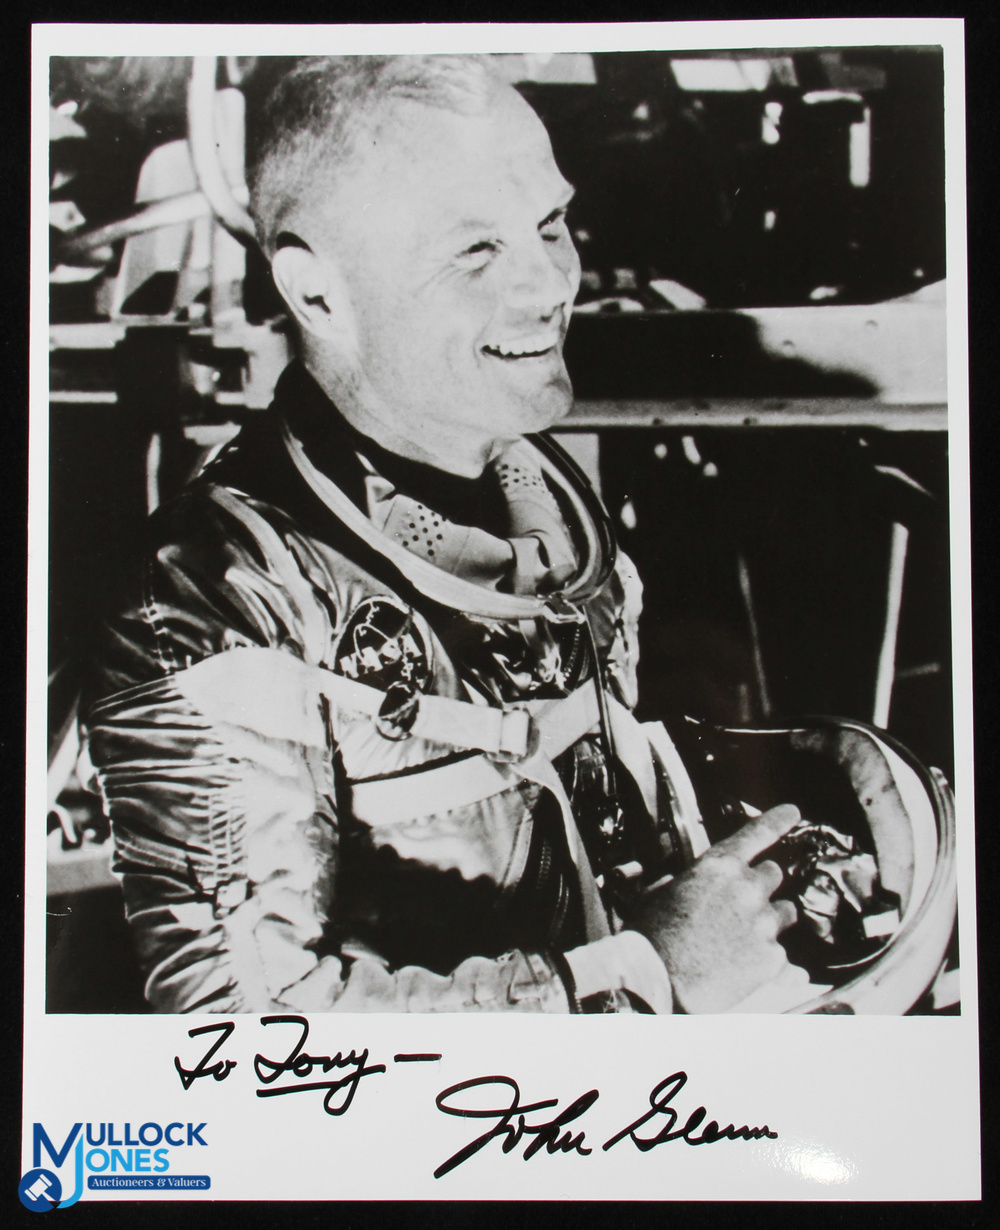 NASA - Autograph - John Glenn - first man to orbit the Earth - bw 10x8 photograph showing Glenn in